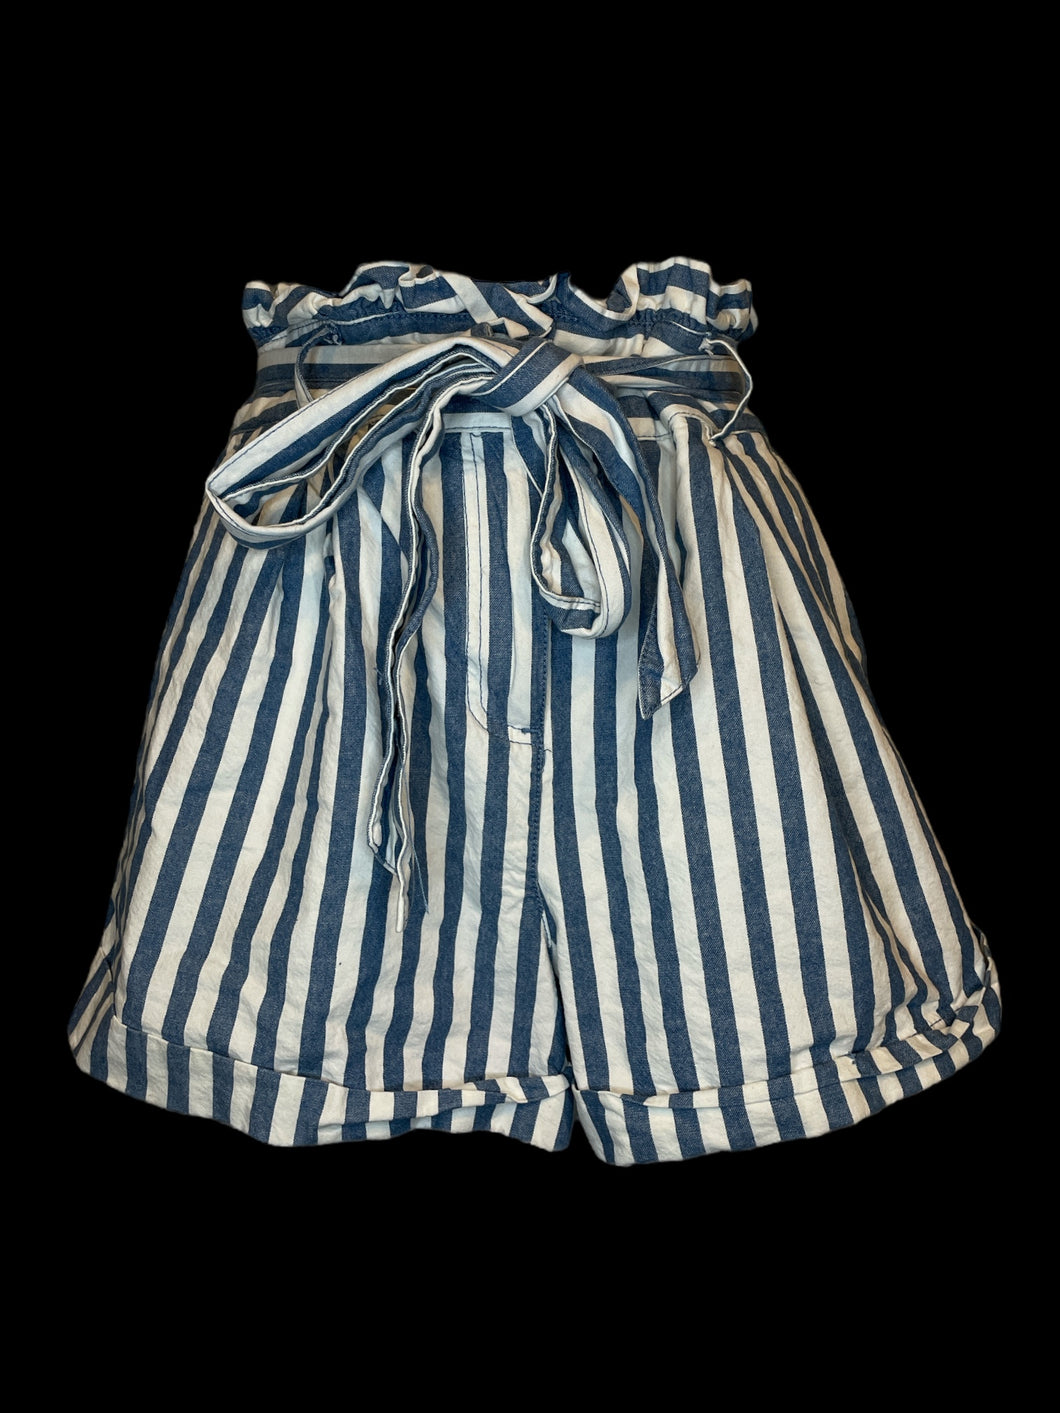 M White & blue stripe high waist paper bag shorts w/ cloth belt, pockets, button/two clasp/zipper closure, & ruffle details